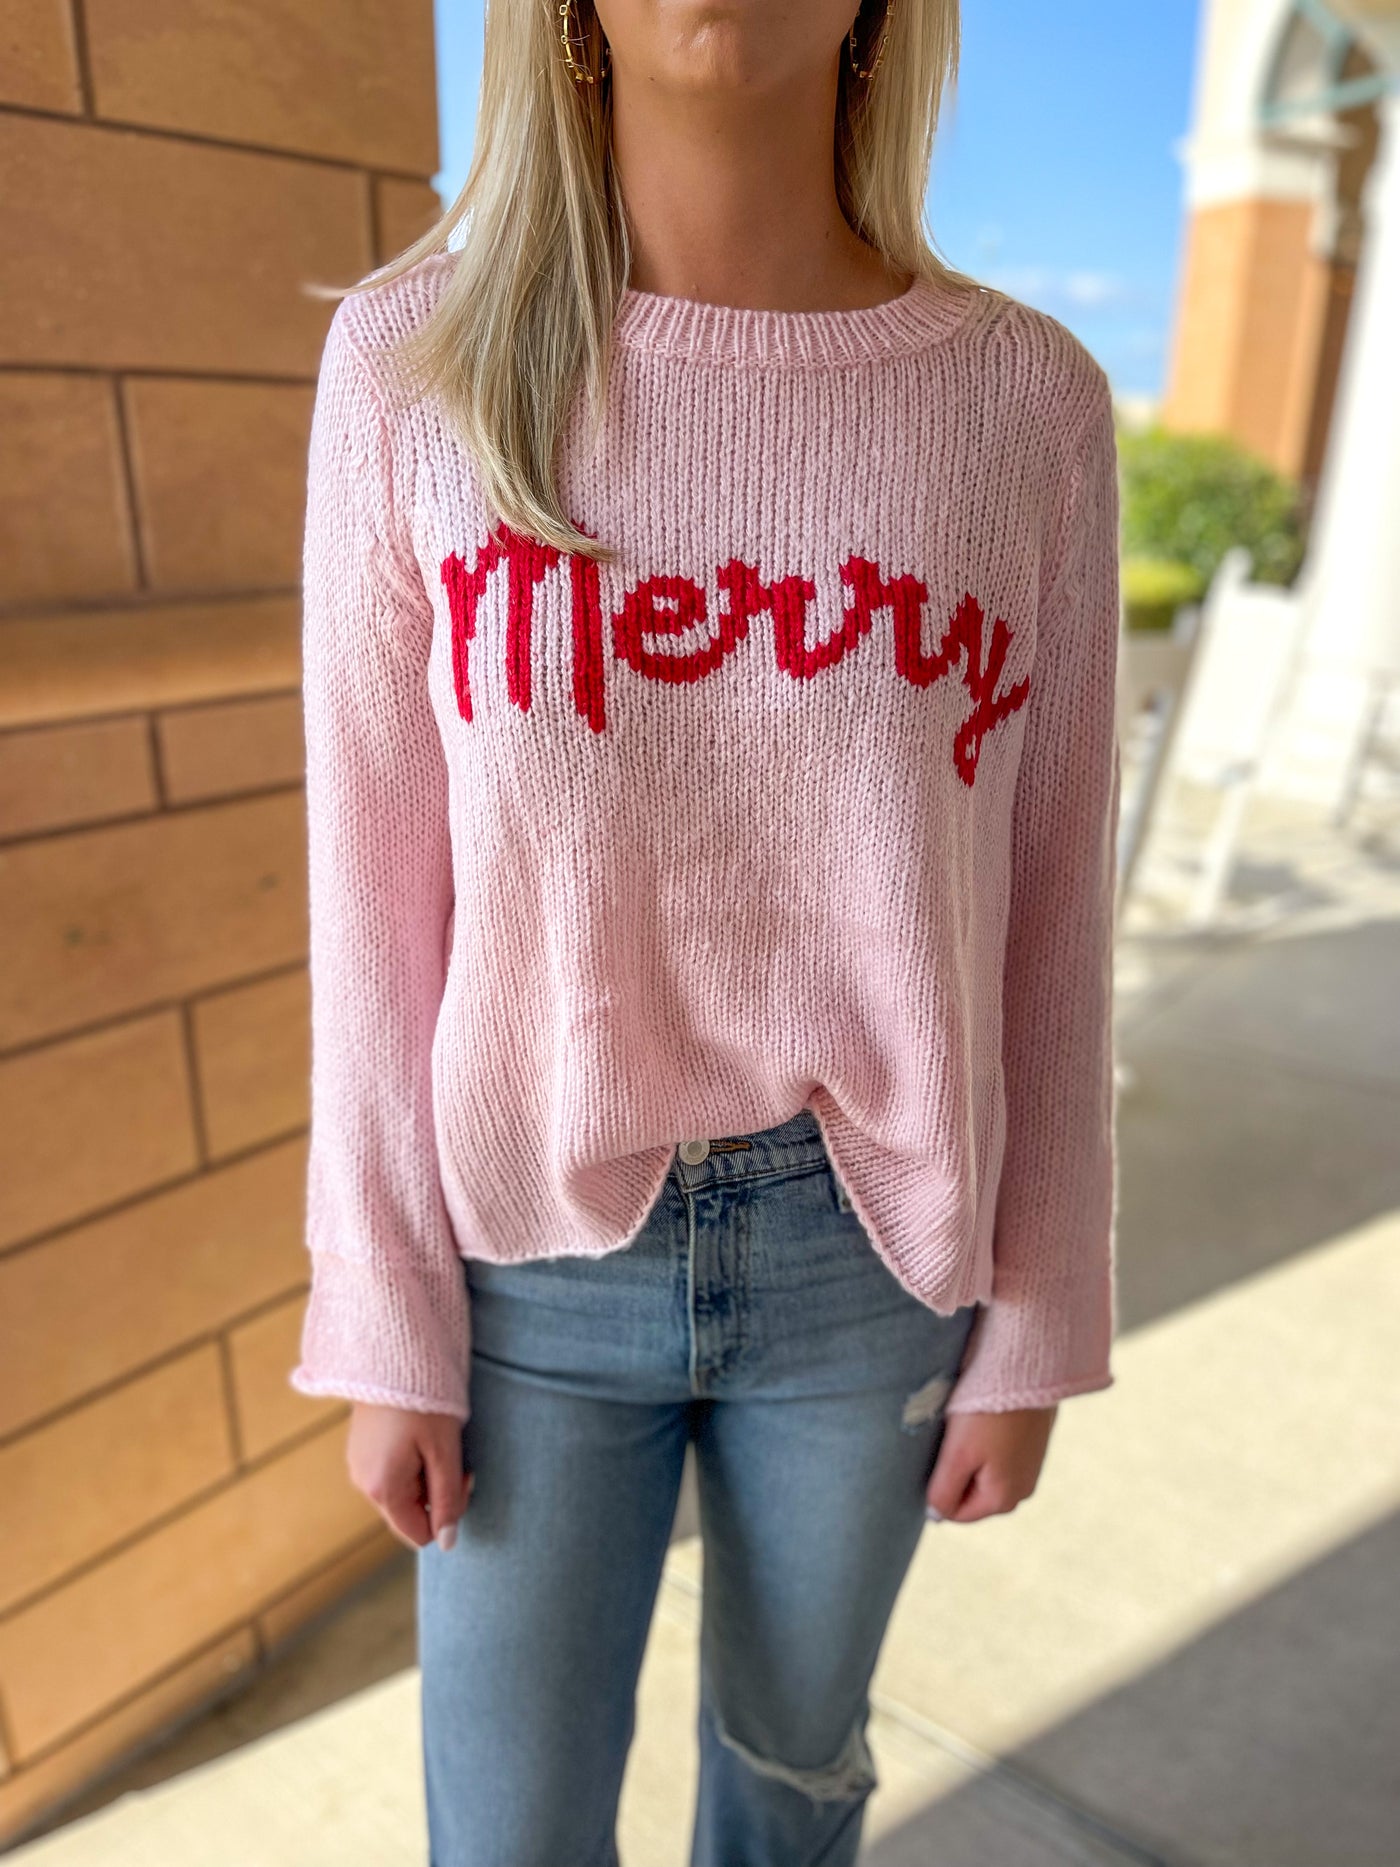 Merry Crew Chunky Sweater